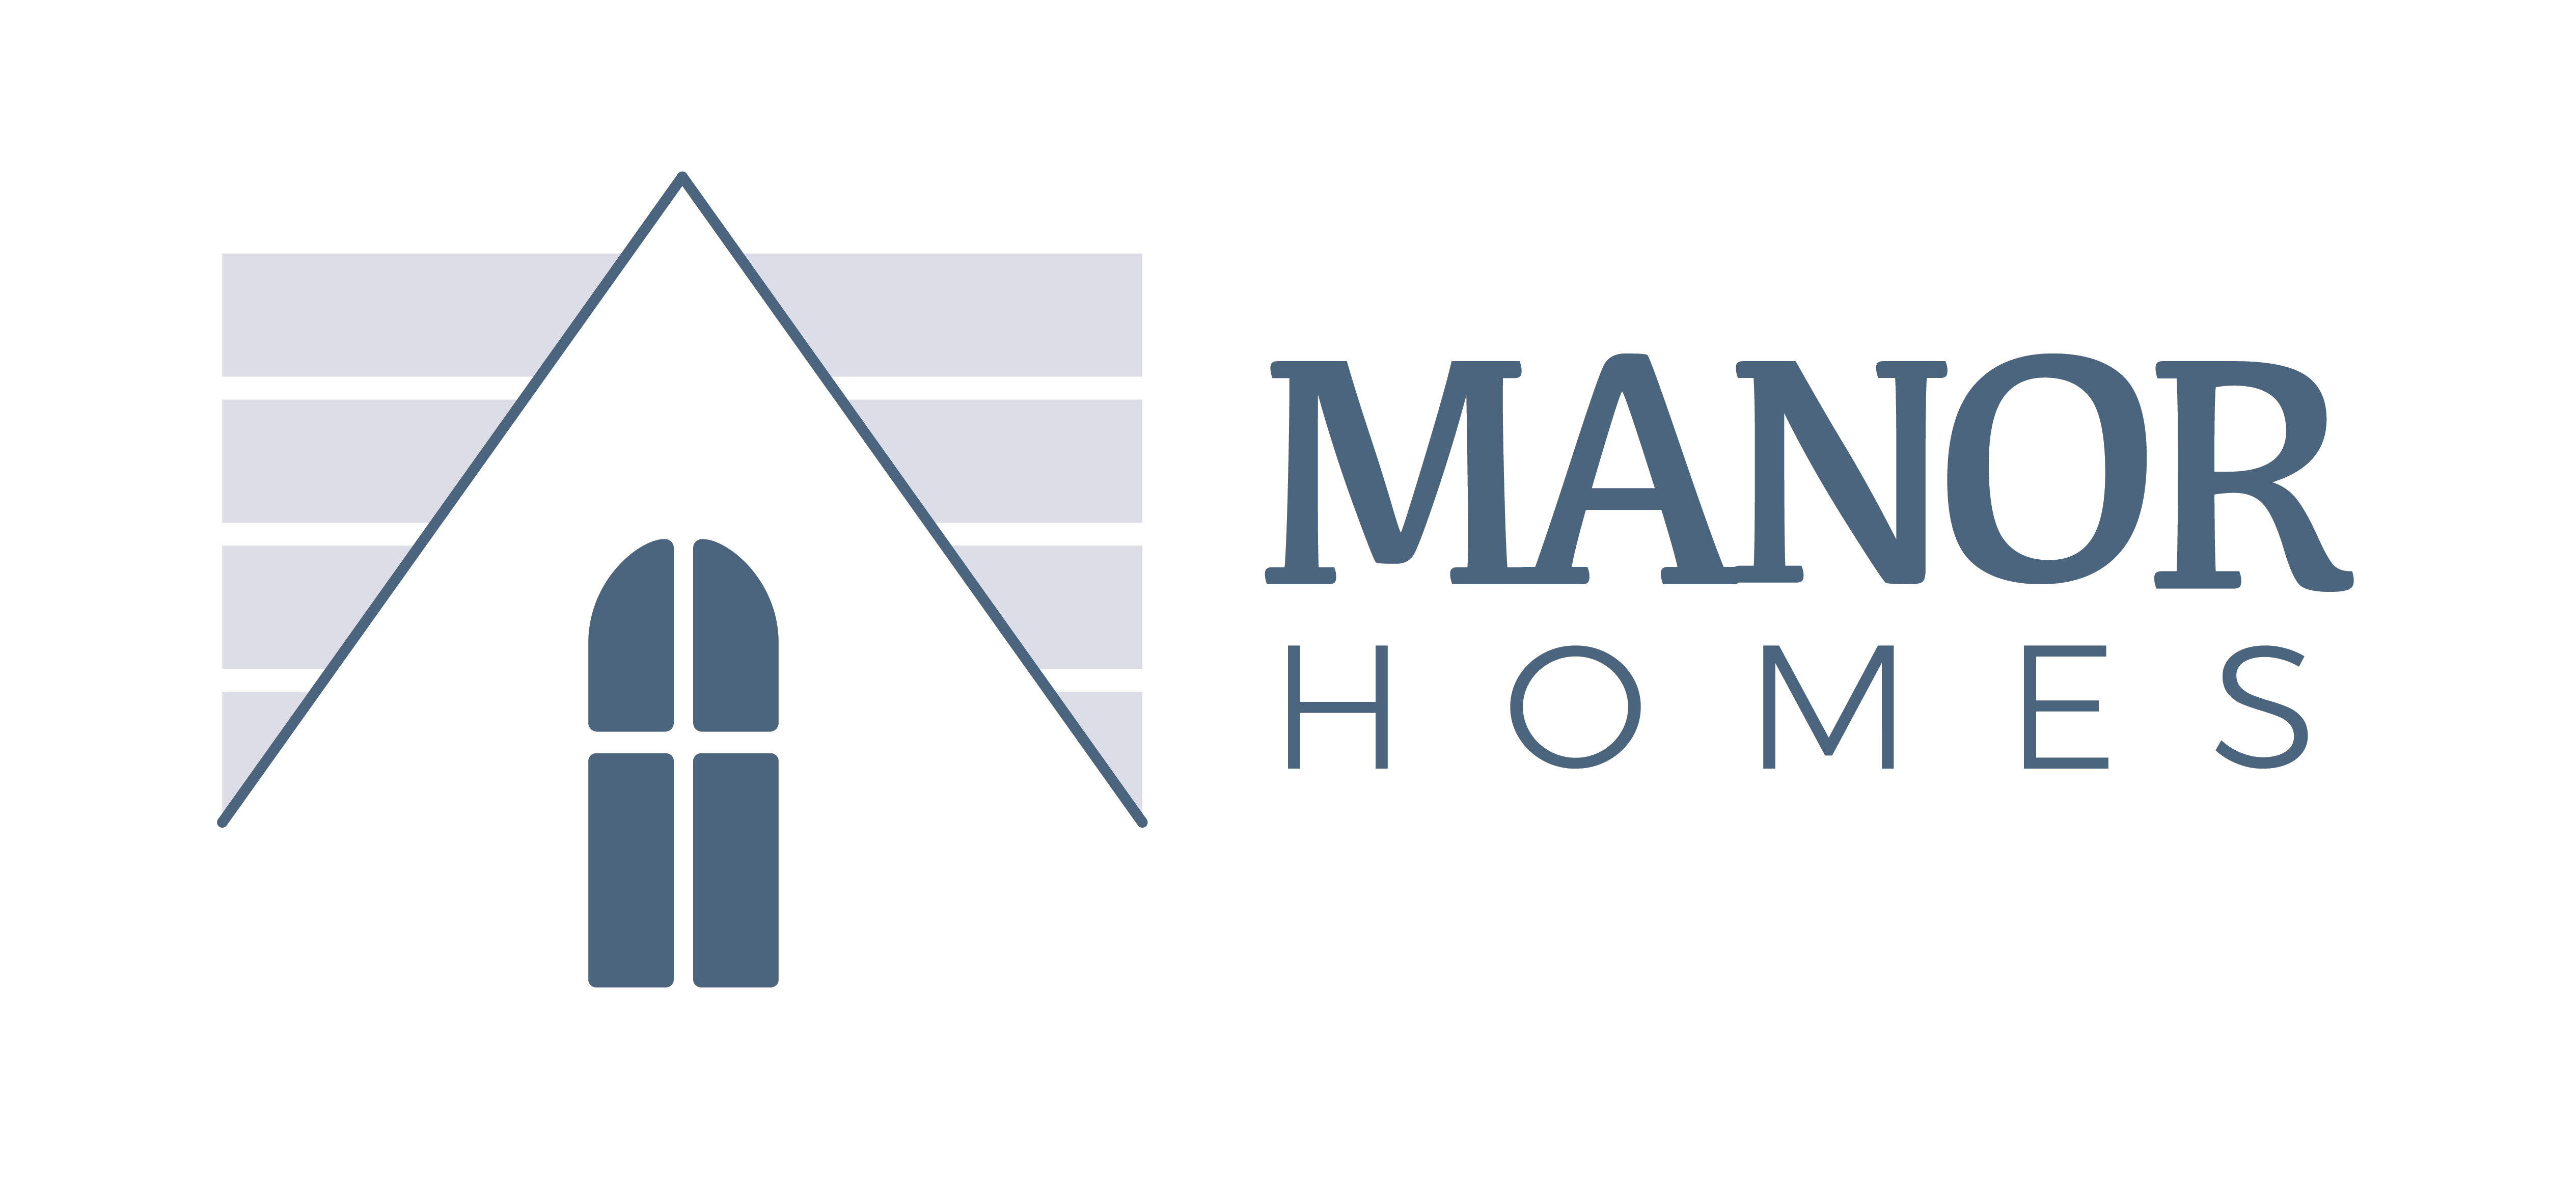 Manor homes logo